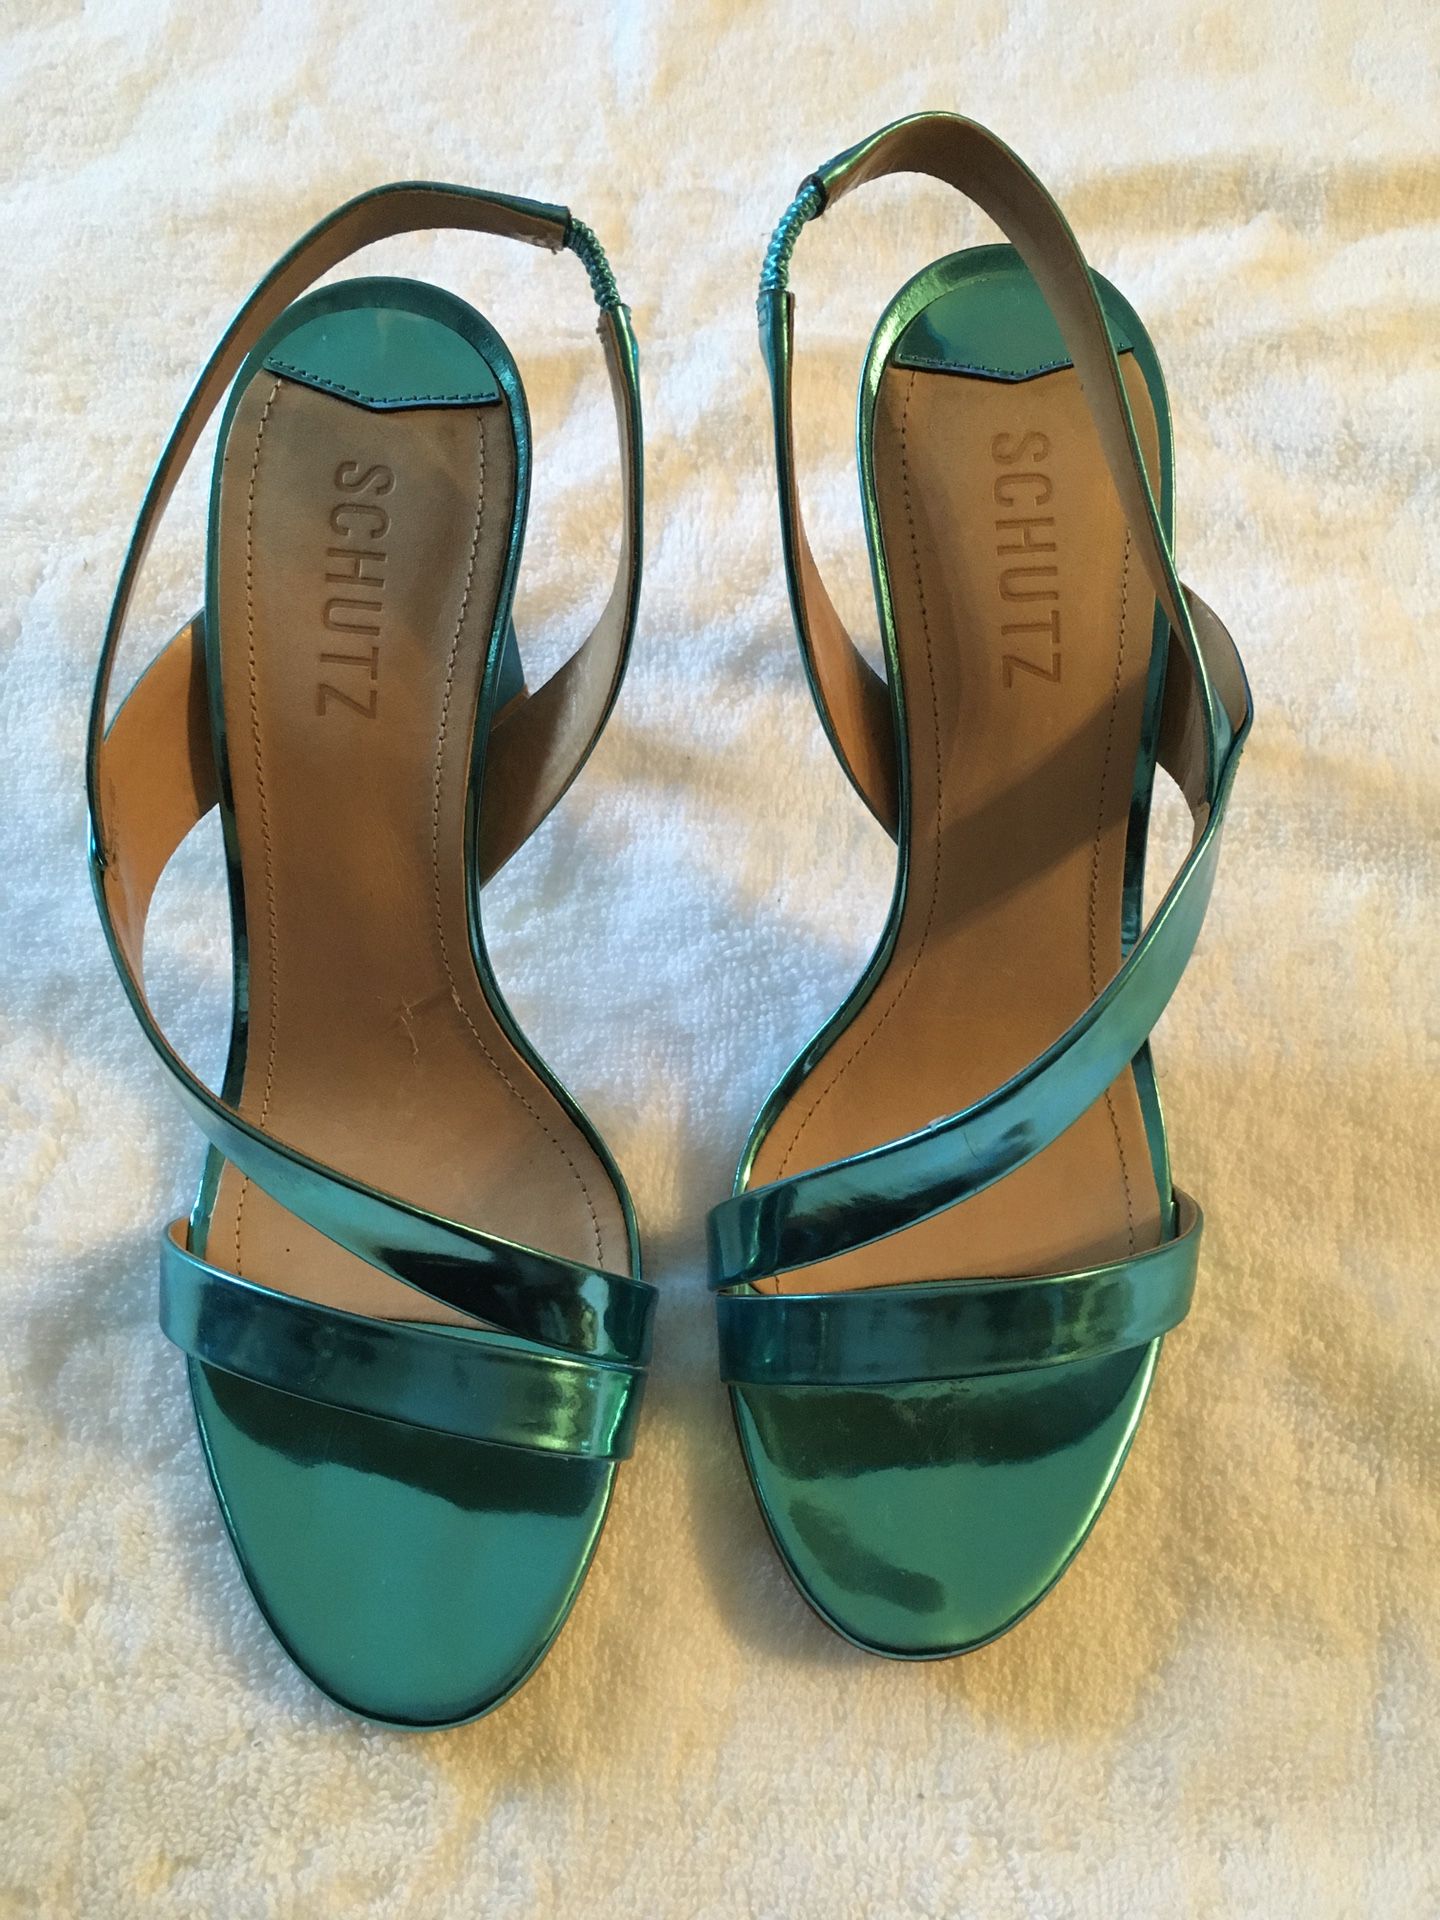 SCHUTZ Leather Metallic Turquoise Straps Stilettos High Heels Size 8.5